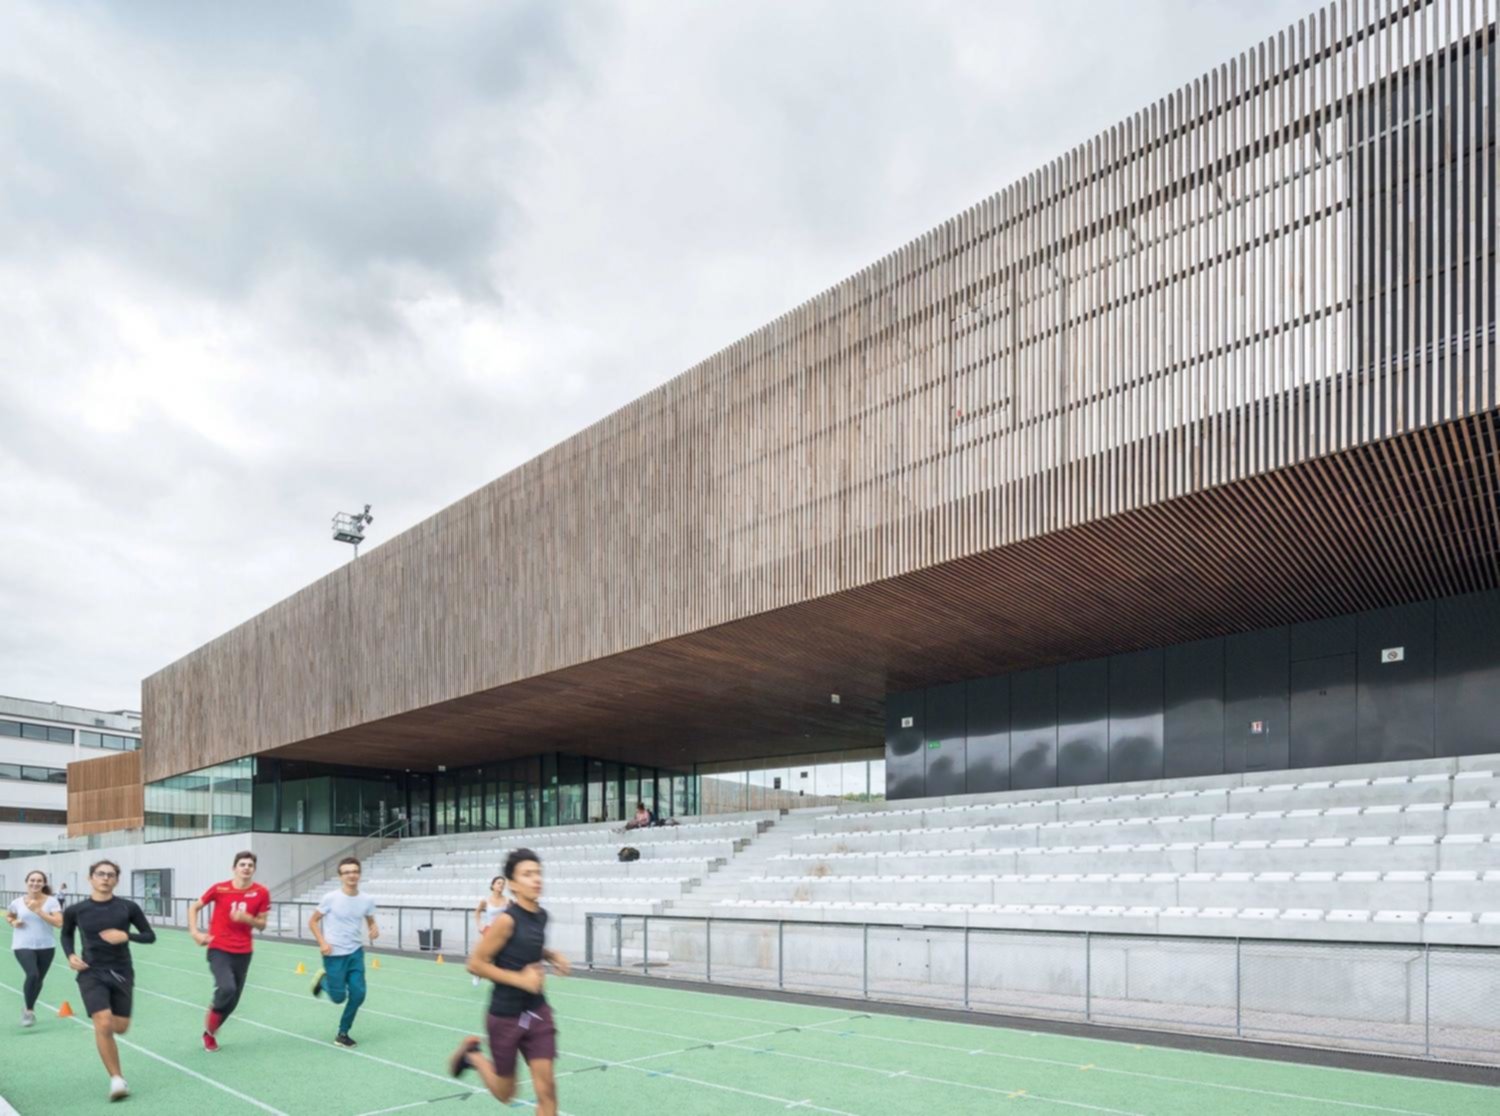 Complexe sportif le Gallo par Bruno Mader Architecte